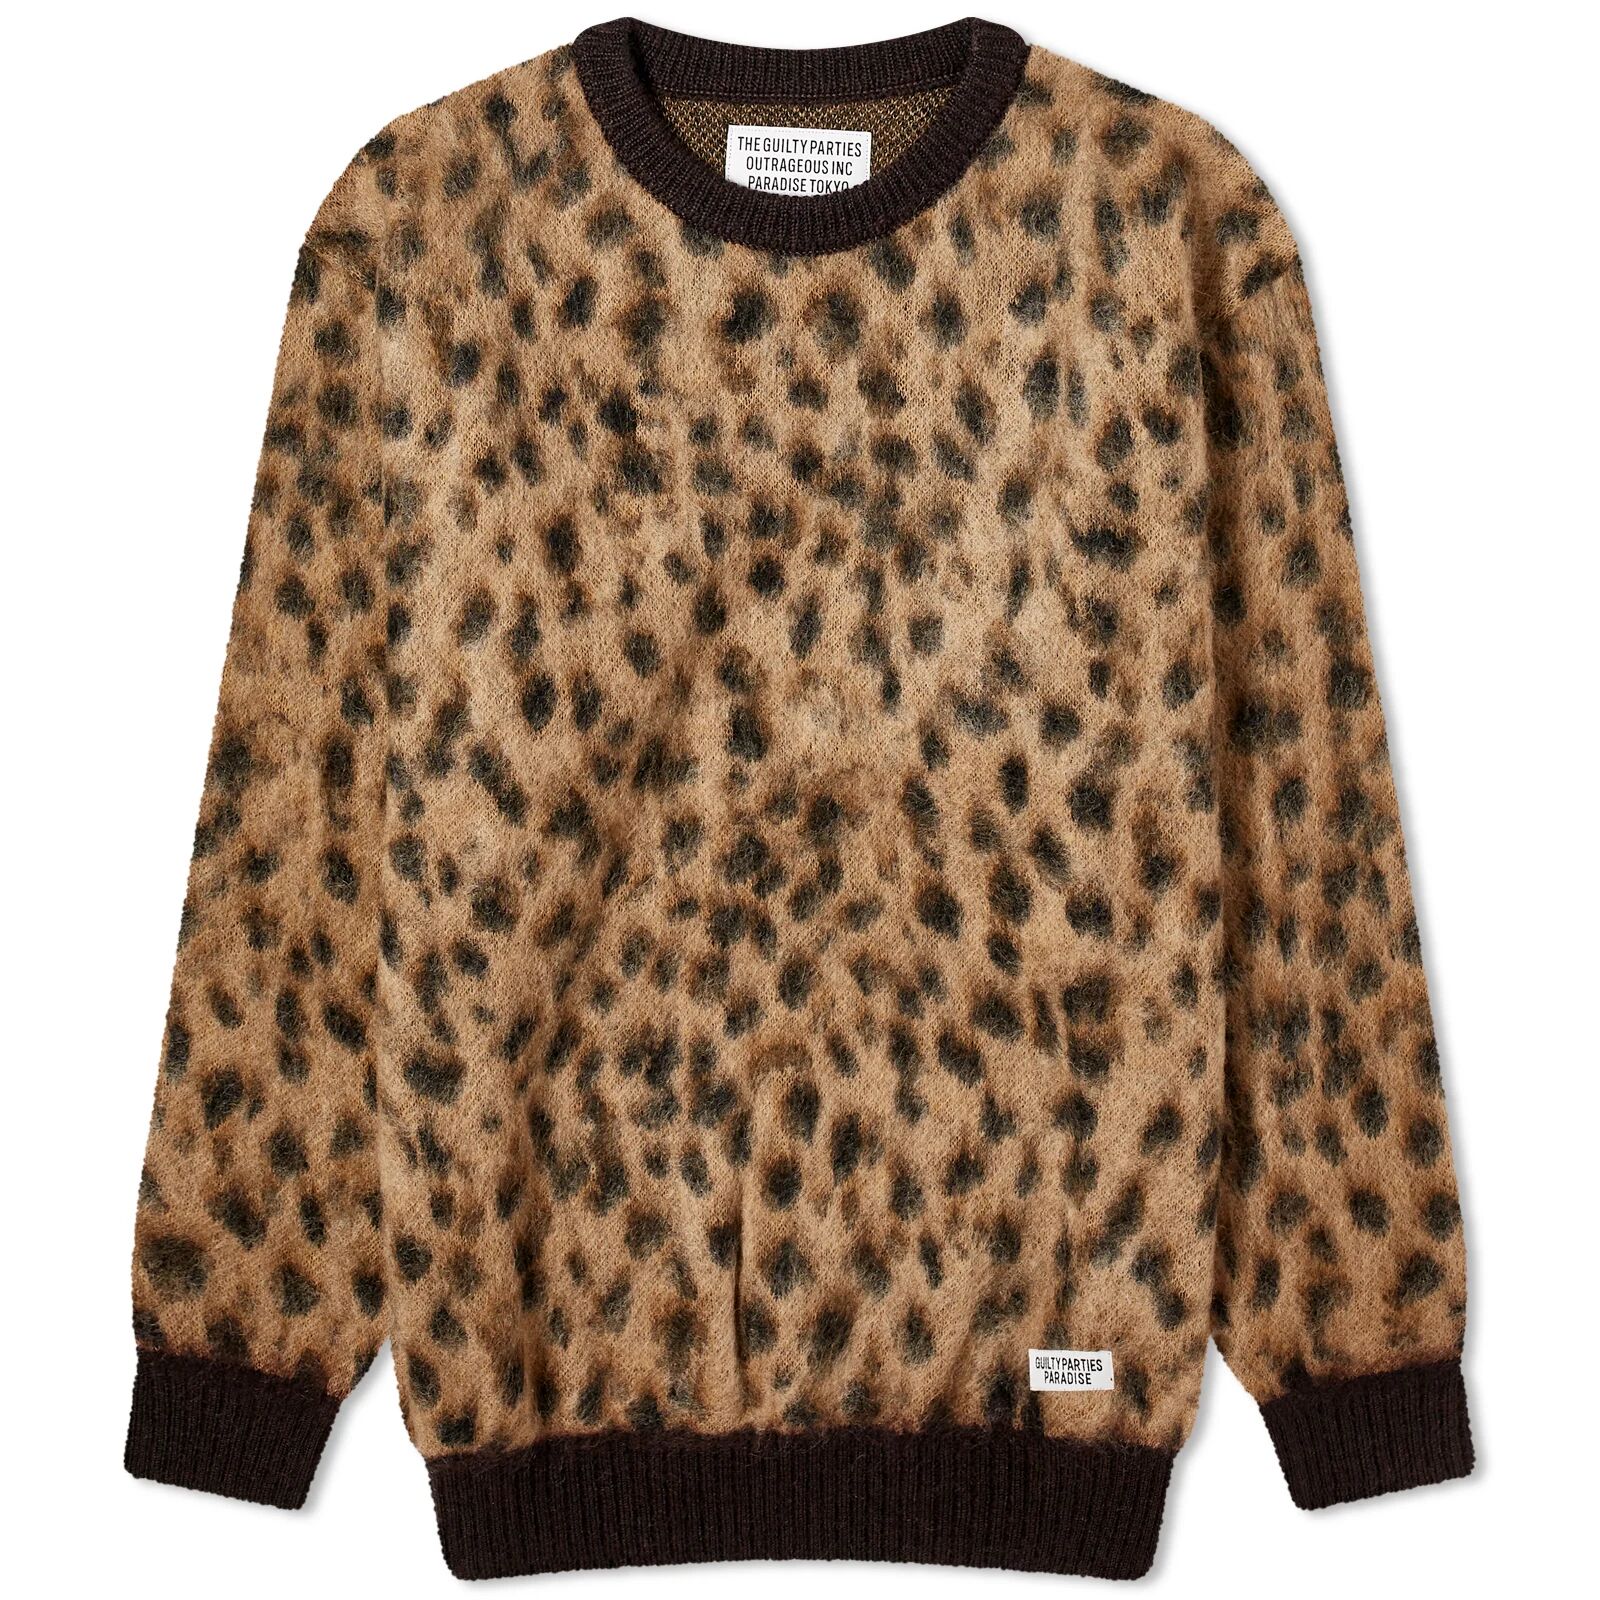 Wacko Maria Men's Leopard Mohair Knitted Jumper in Beige, Size Medium